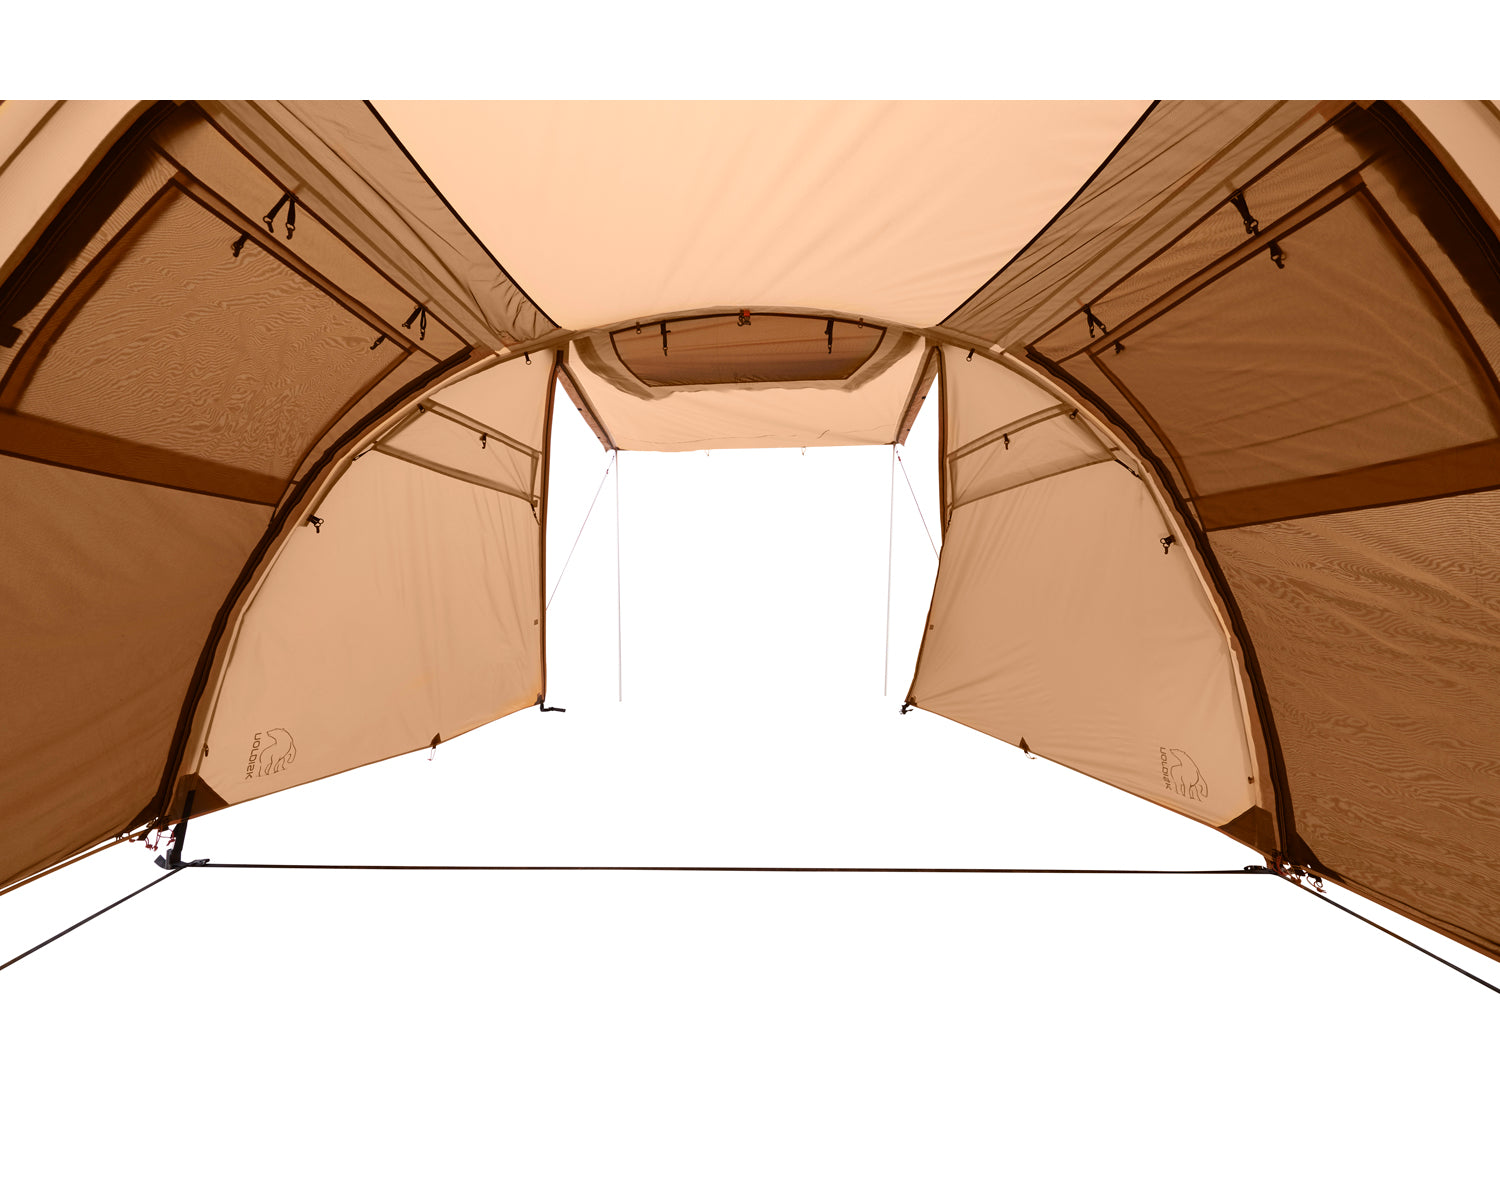 Reisa 4 PU tent - 4 person - Cashew/Brown